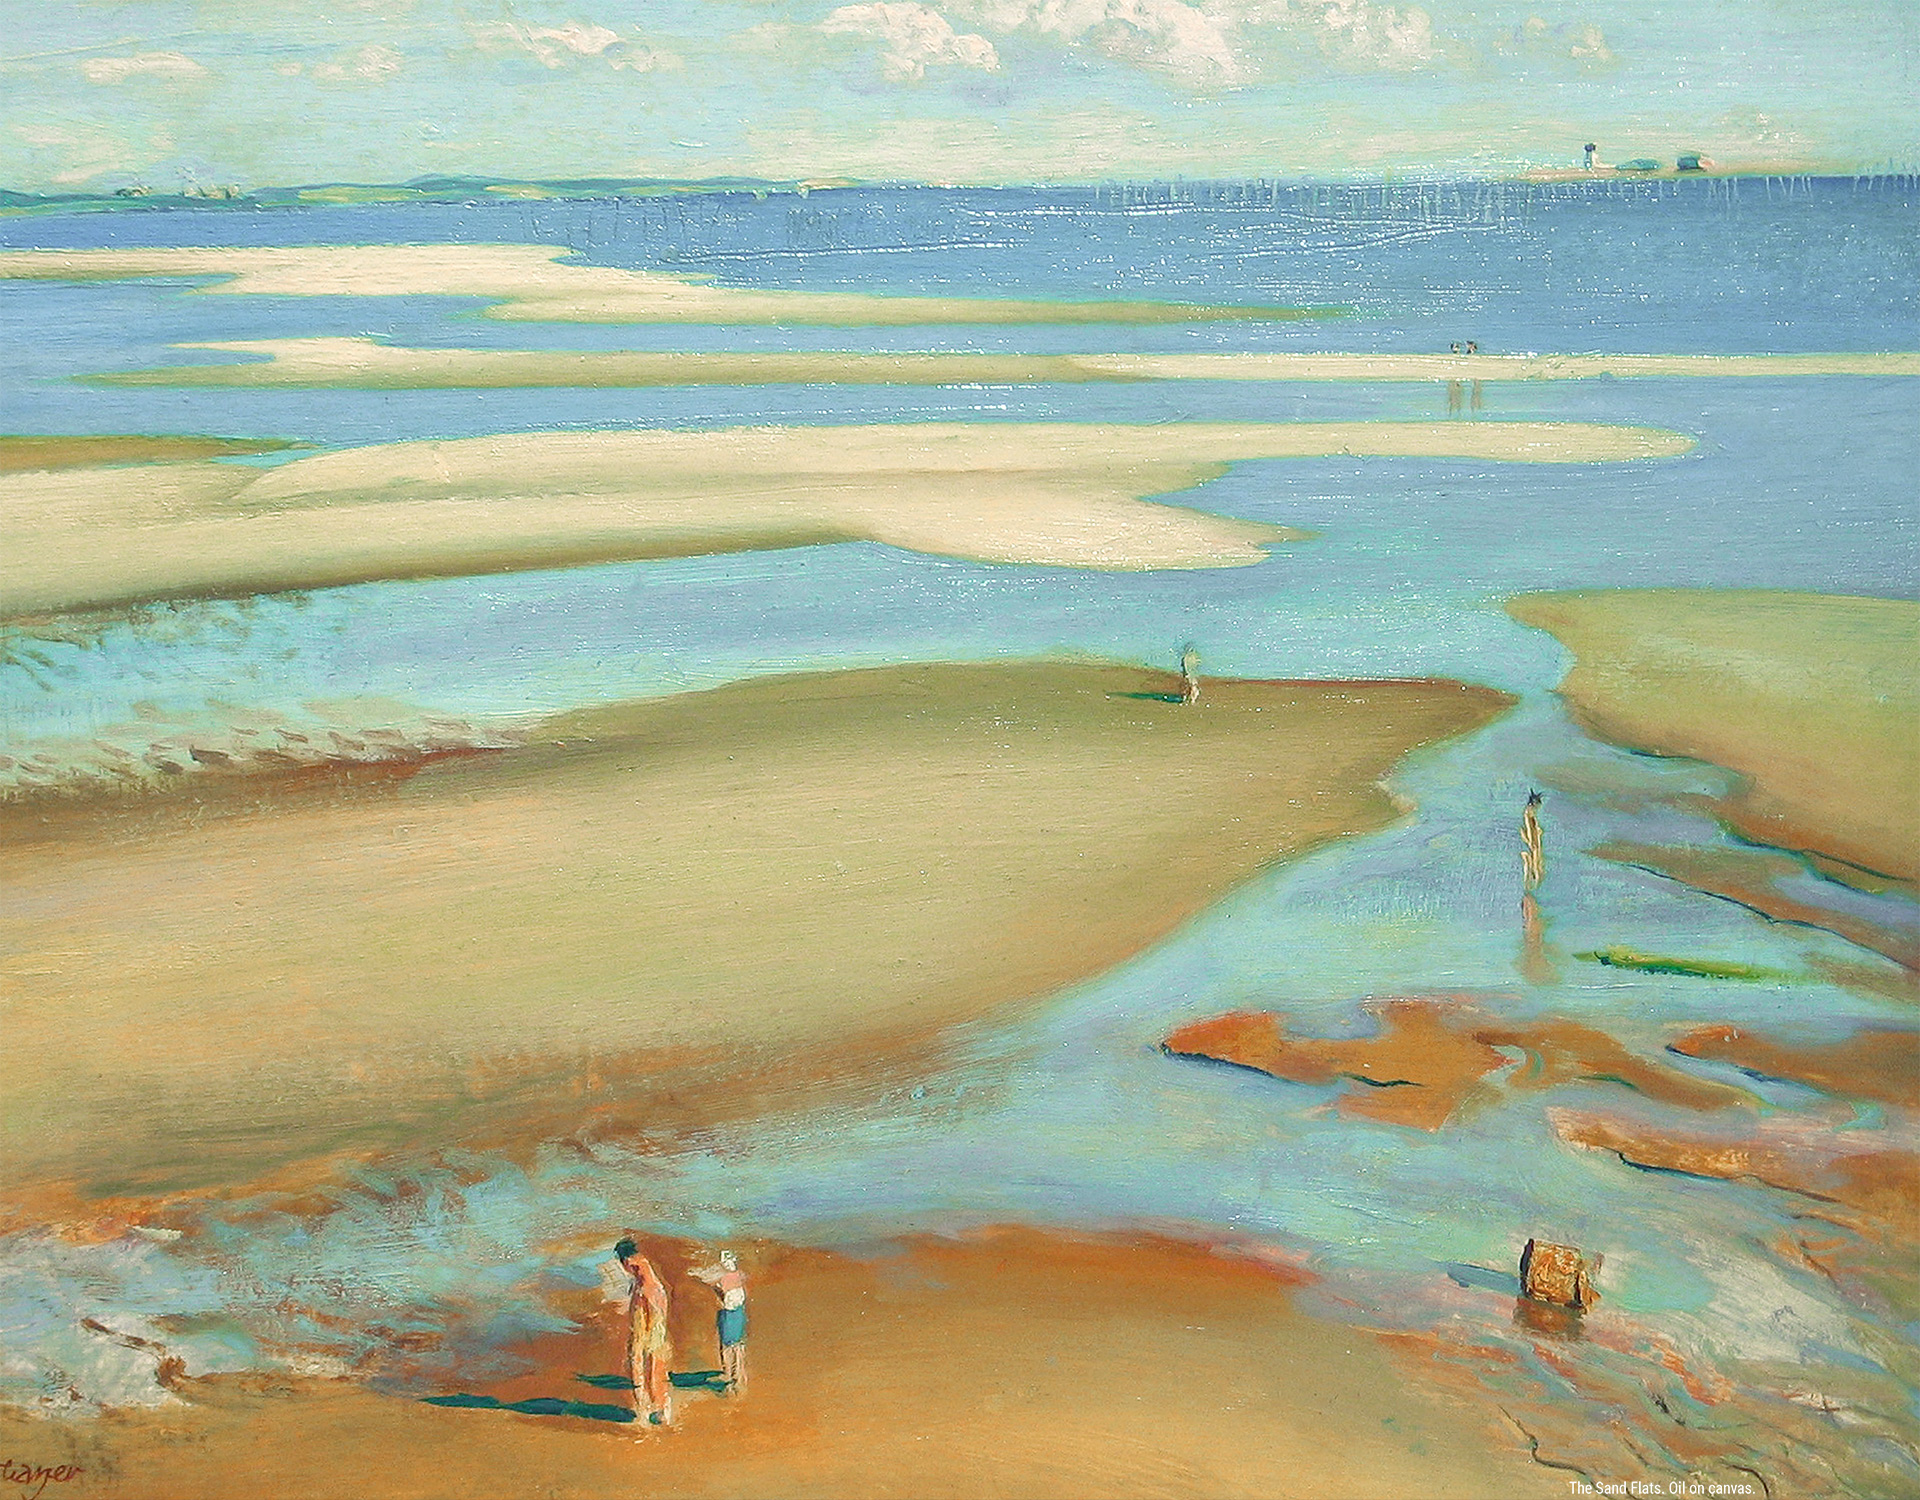 The Sand Flats. Oil on canvas.